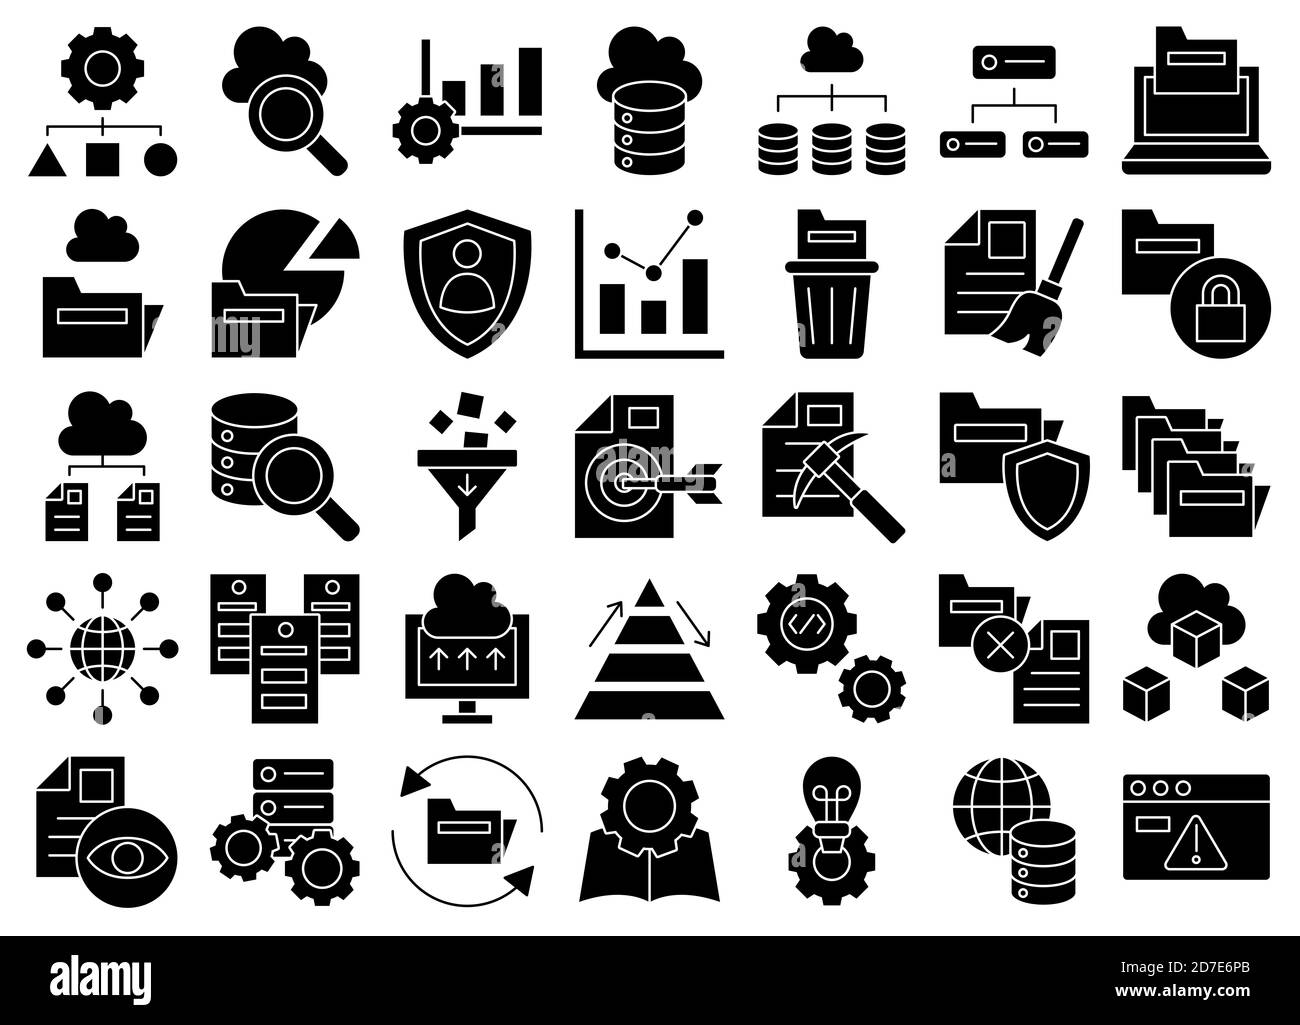 Data Analytics Glyph Iconset Stock Photo